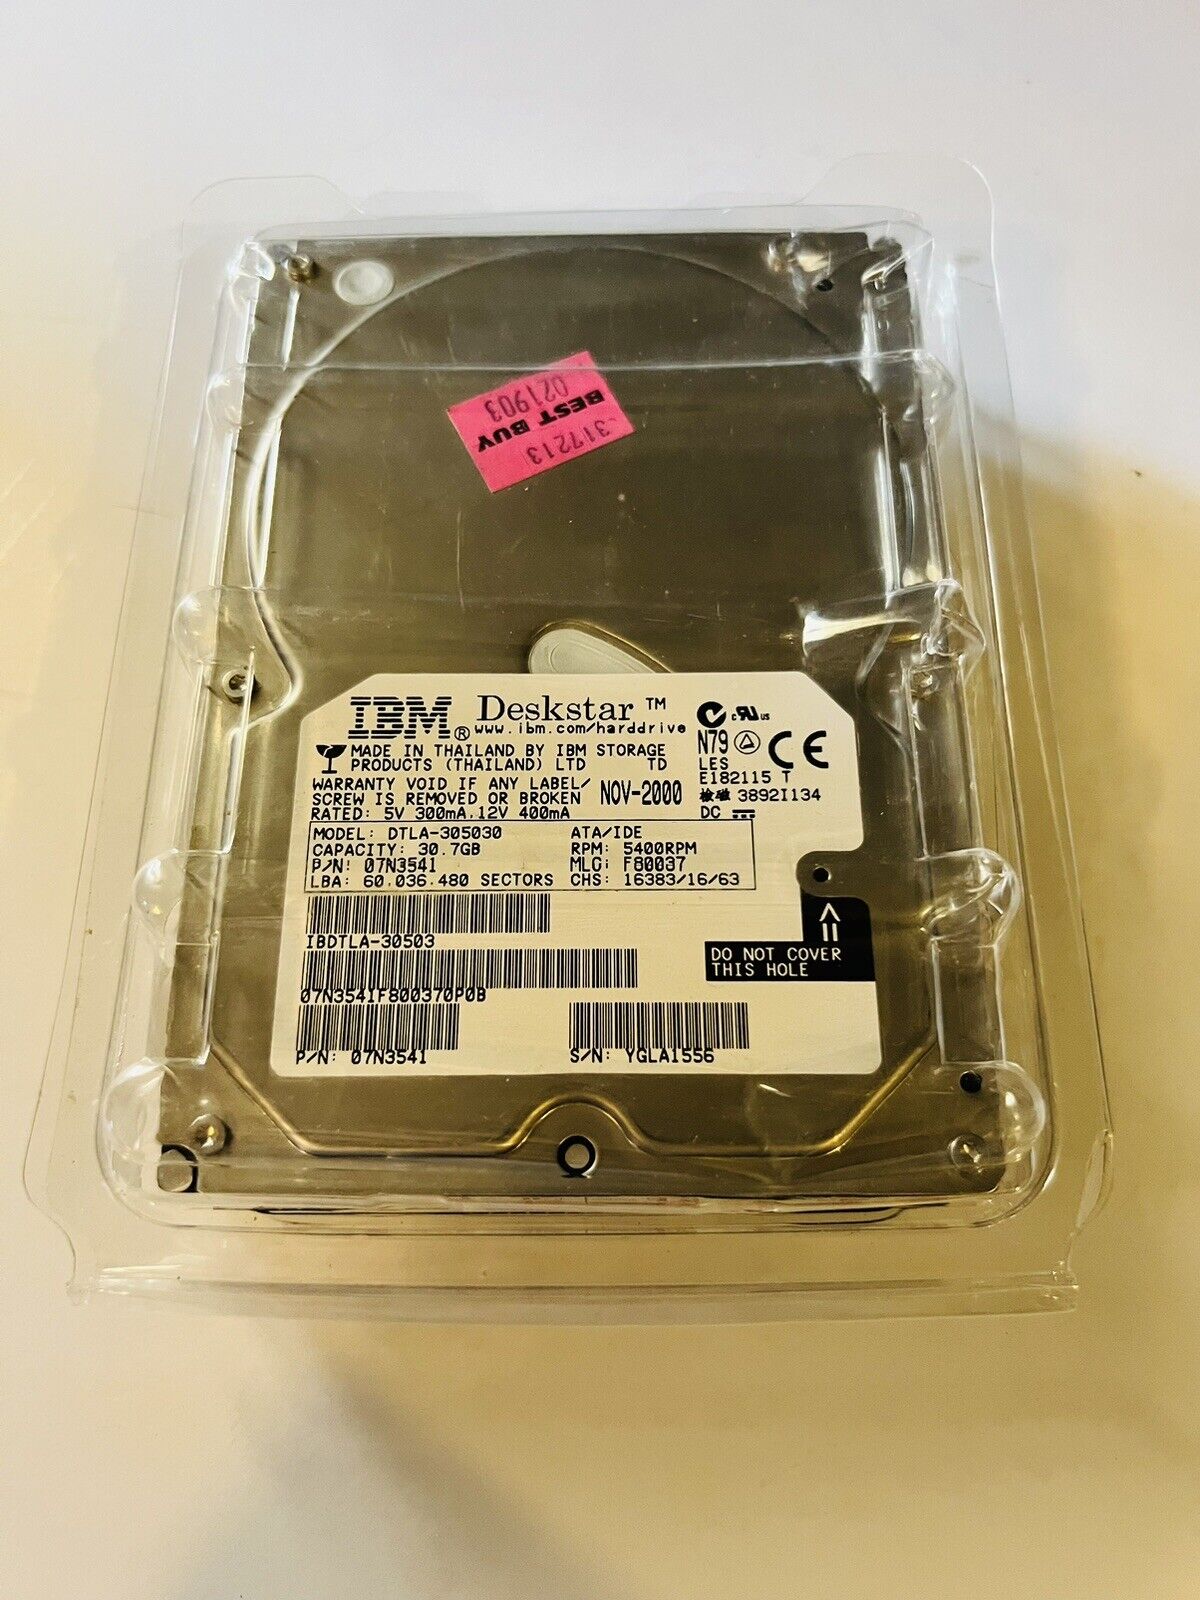 IBM DESKSTAR DTLA-305030 30.7GB 3.5